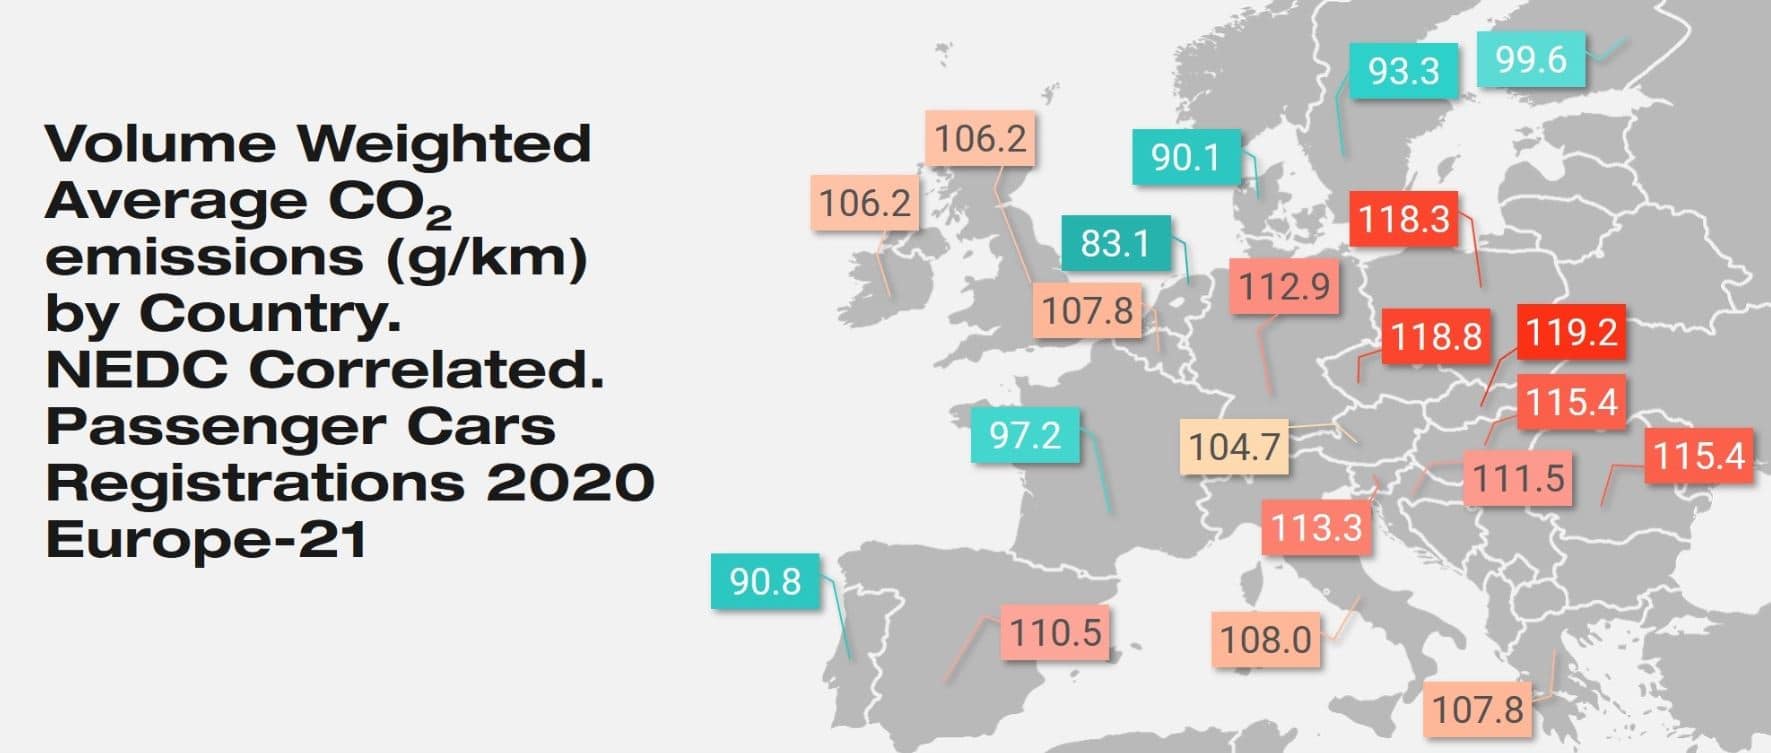 media emisiones CO2 europa